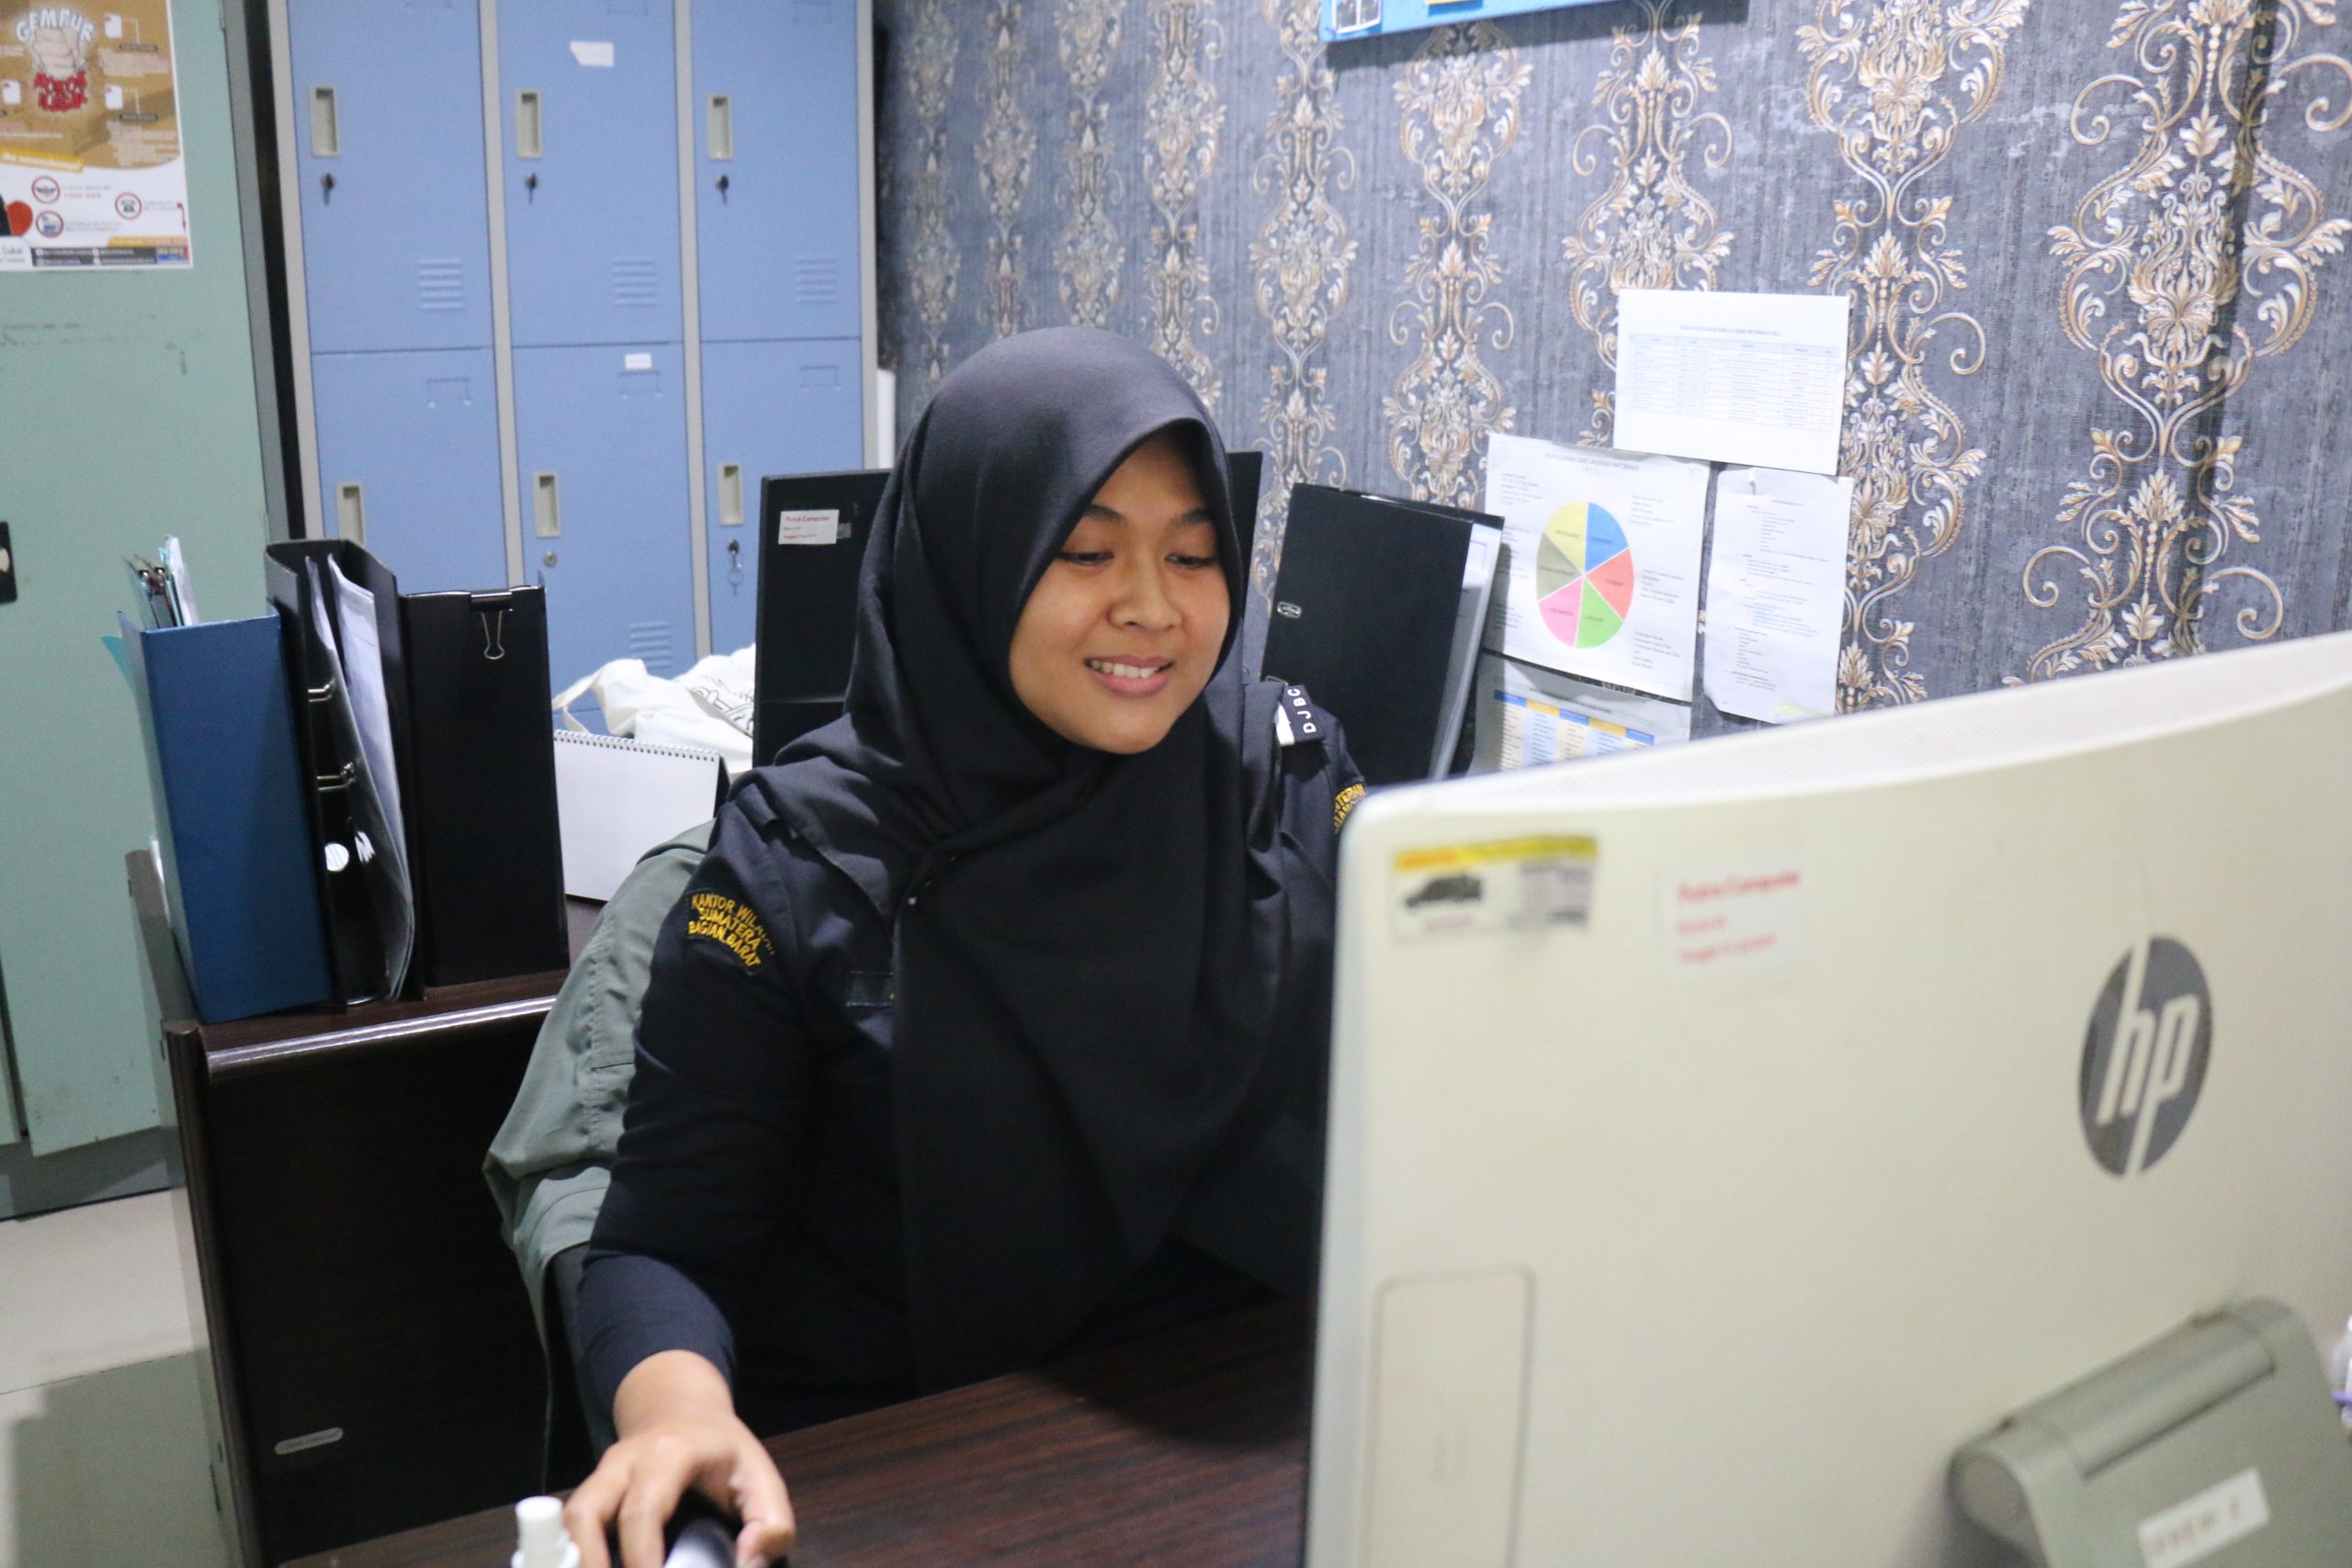 Bea Cukai Lampung Tingkatkan Pemahaman Pengguna Jasa tentang PMK Nomor 175/PMK.04/2021 melalui Sosialisasi